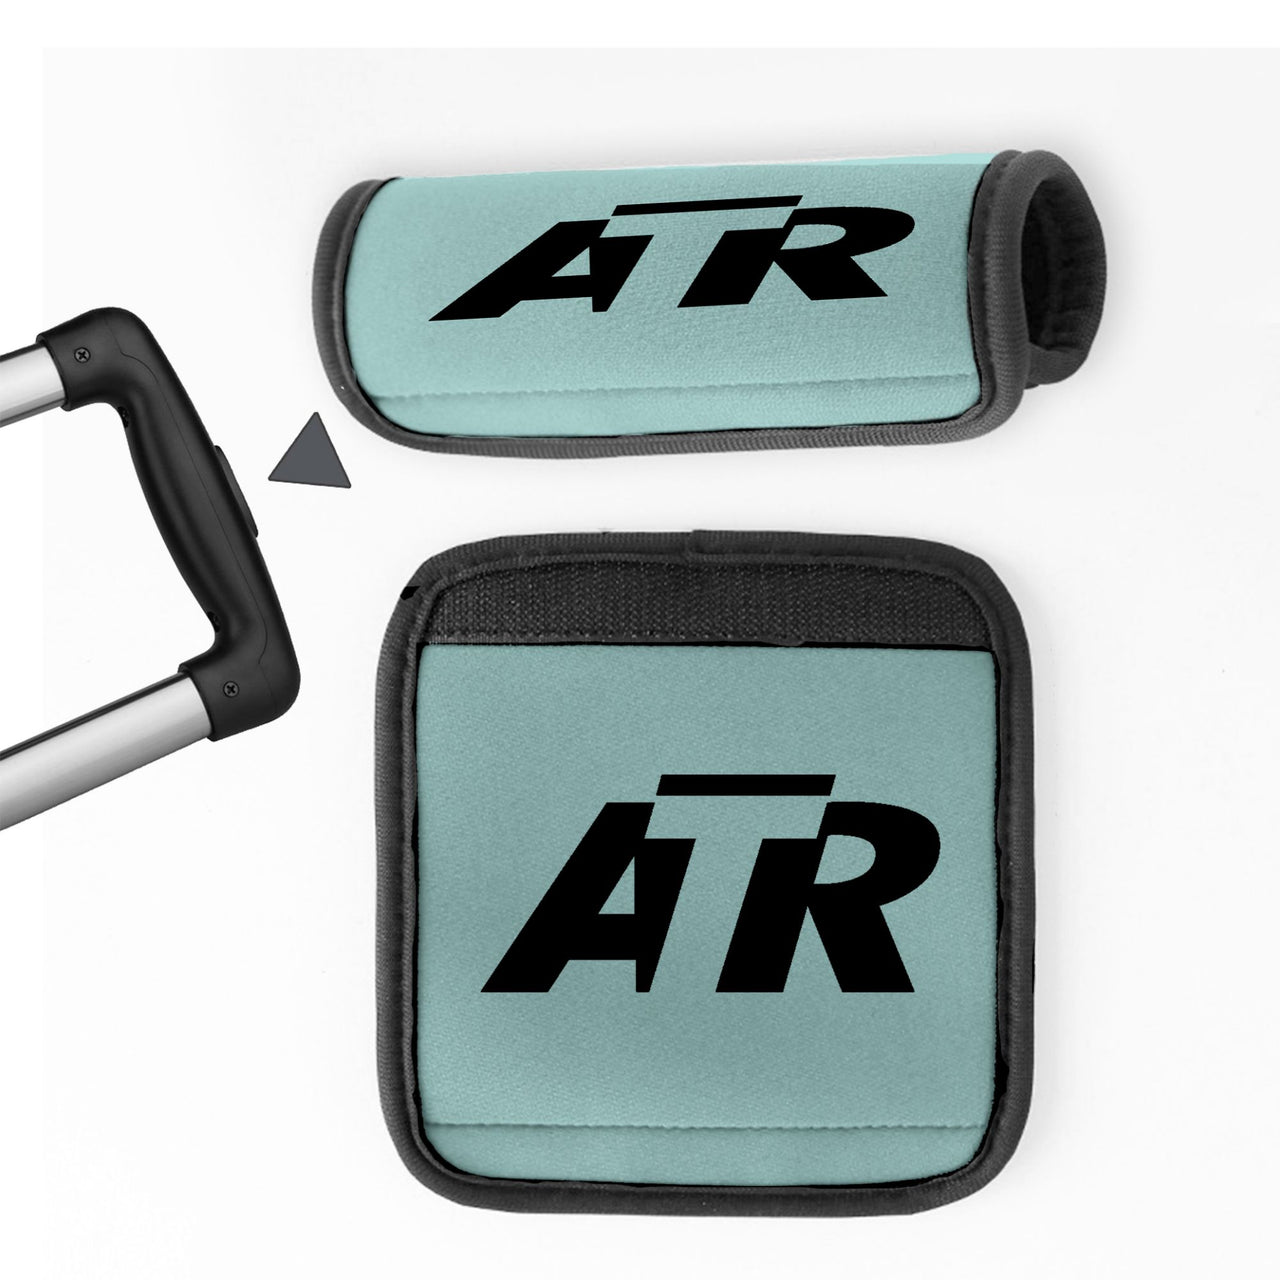 ATR & Text Designed Neoprene Luggage Handle Covers